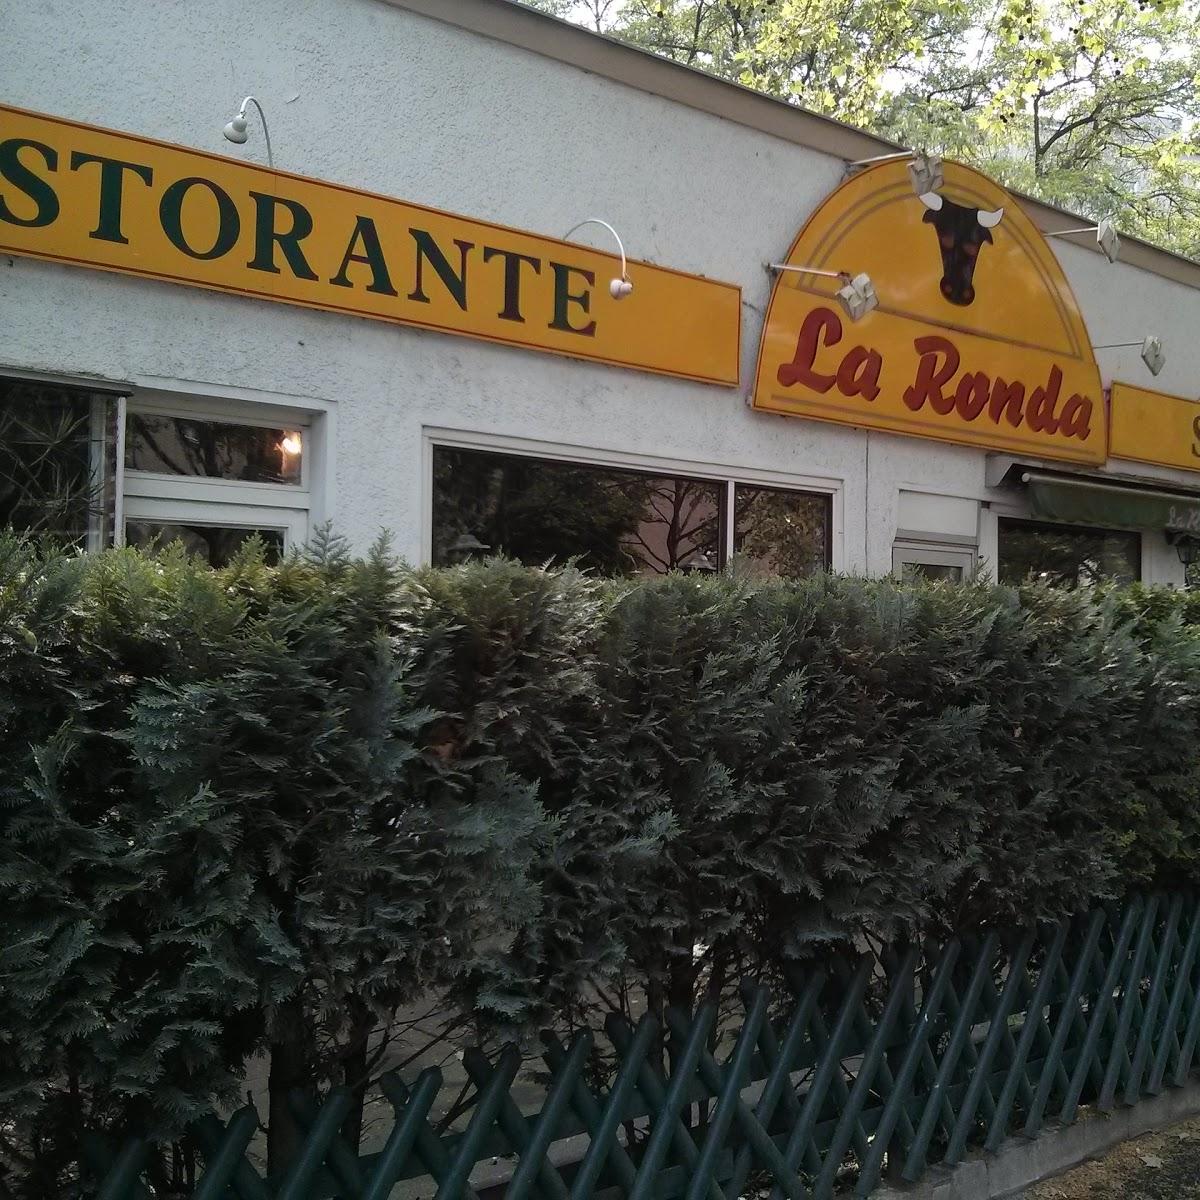 Restaurant "Steakhaus-Ristorante-Pizzeria La Ronda" in Berlin